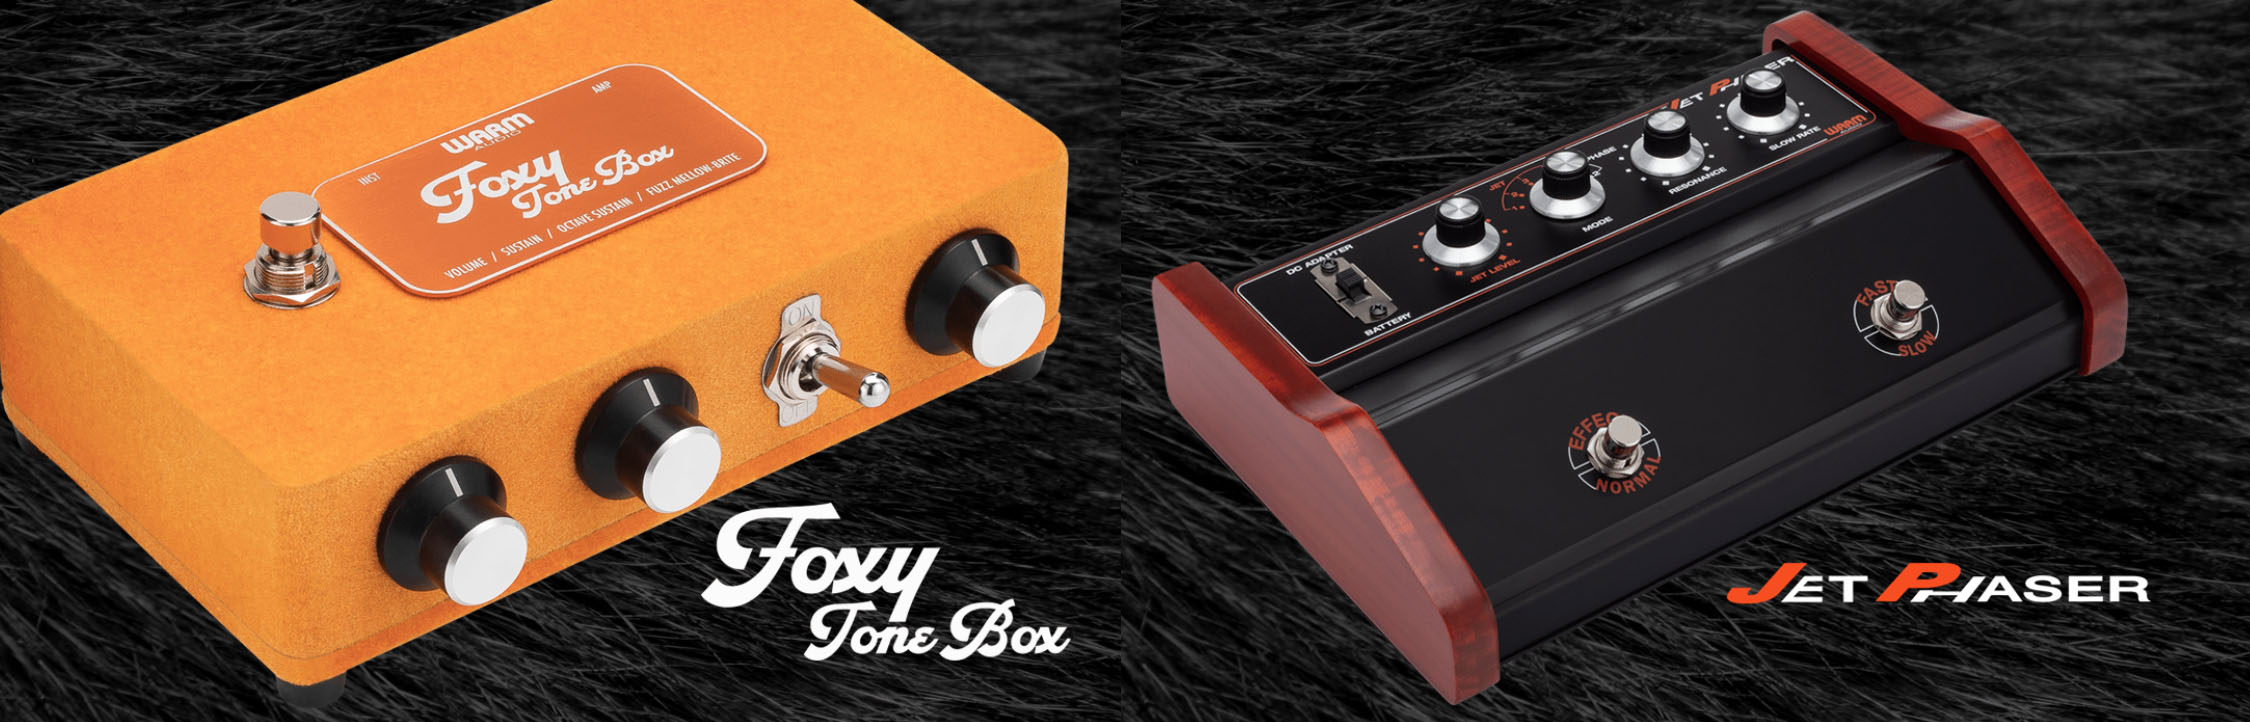 Jet Phaser & Foxy Tone Box! Nytt från Warm Audio